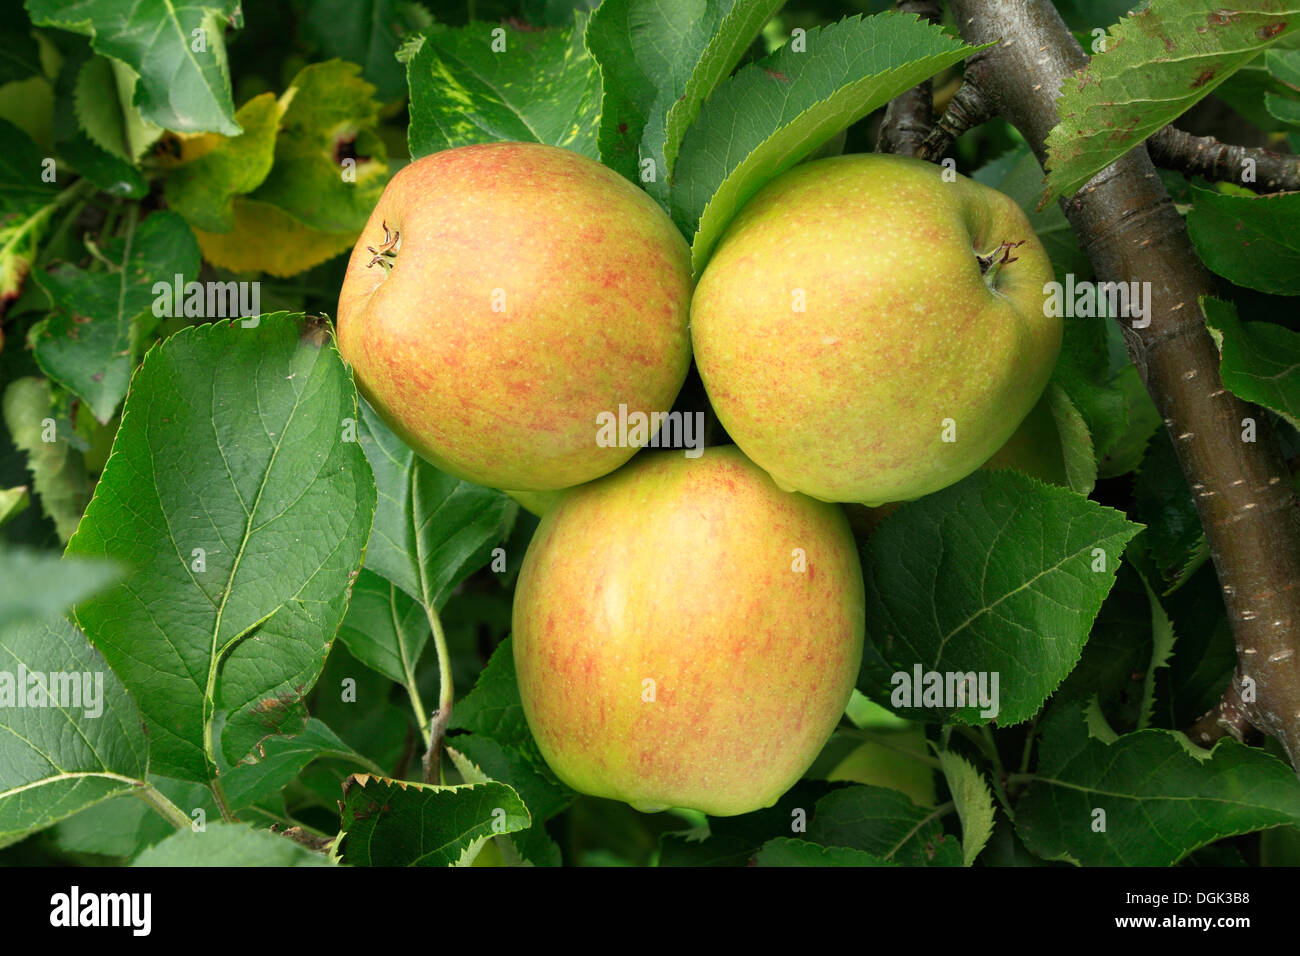 Apple 'Crown Gold', malus domestica apples variety varieties growing on tree Stock Photo